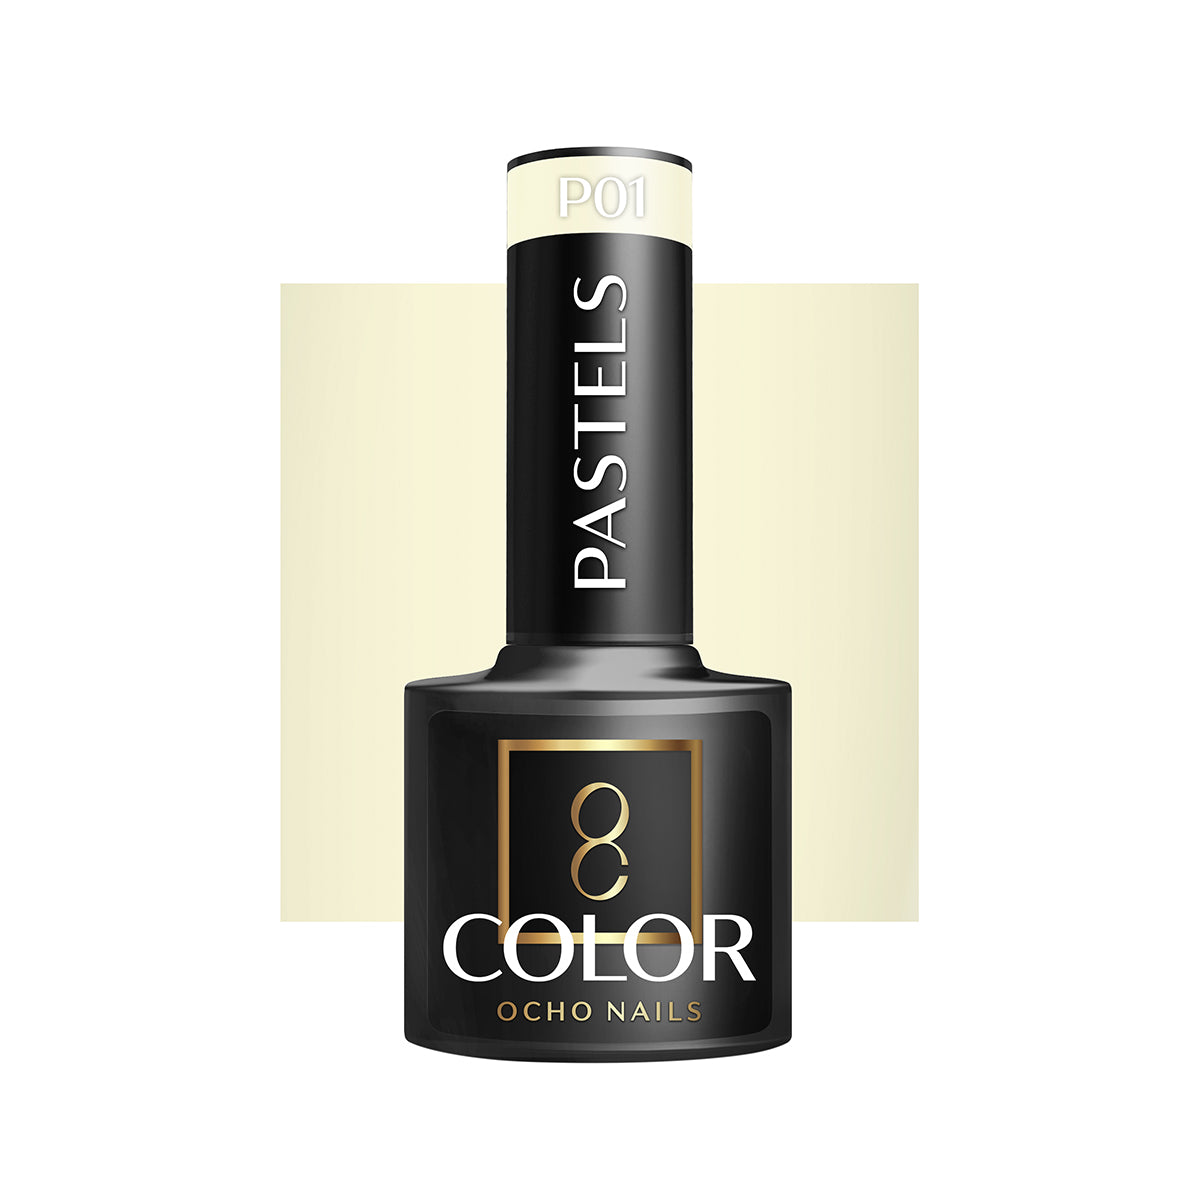 OCHO NAILS Hybride nagellak pastels P01 -5 g